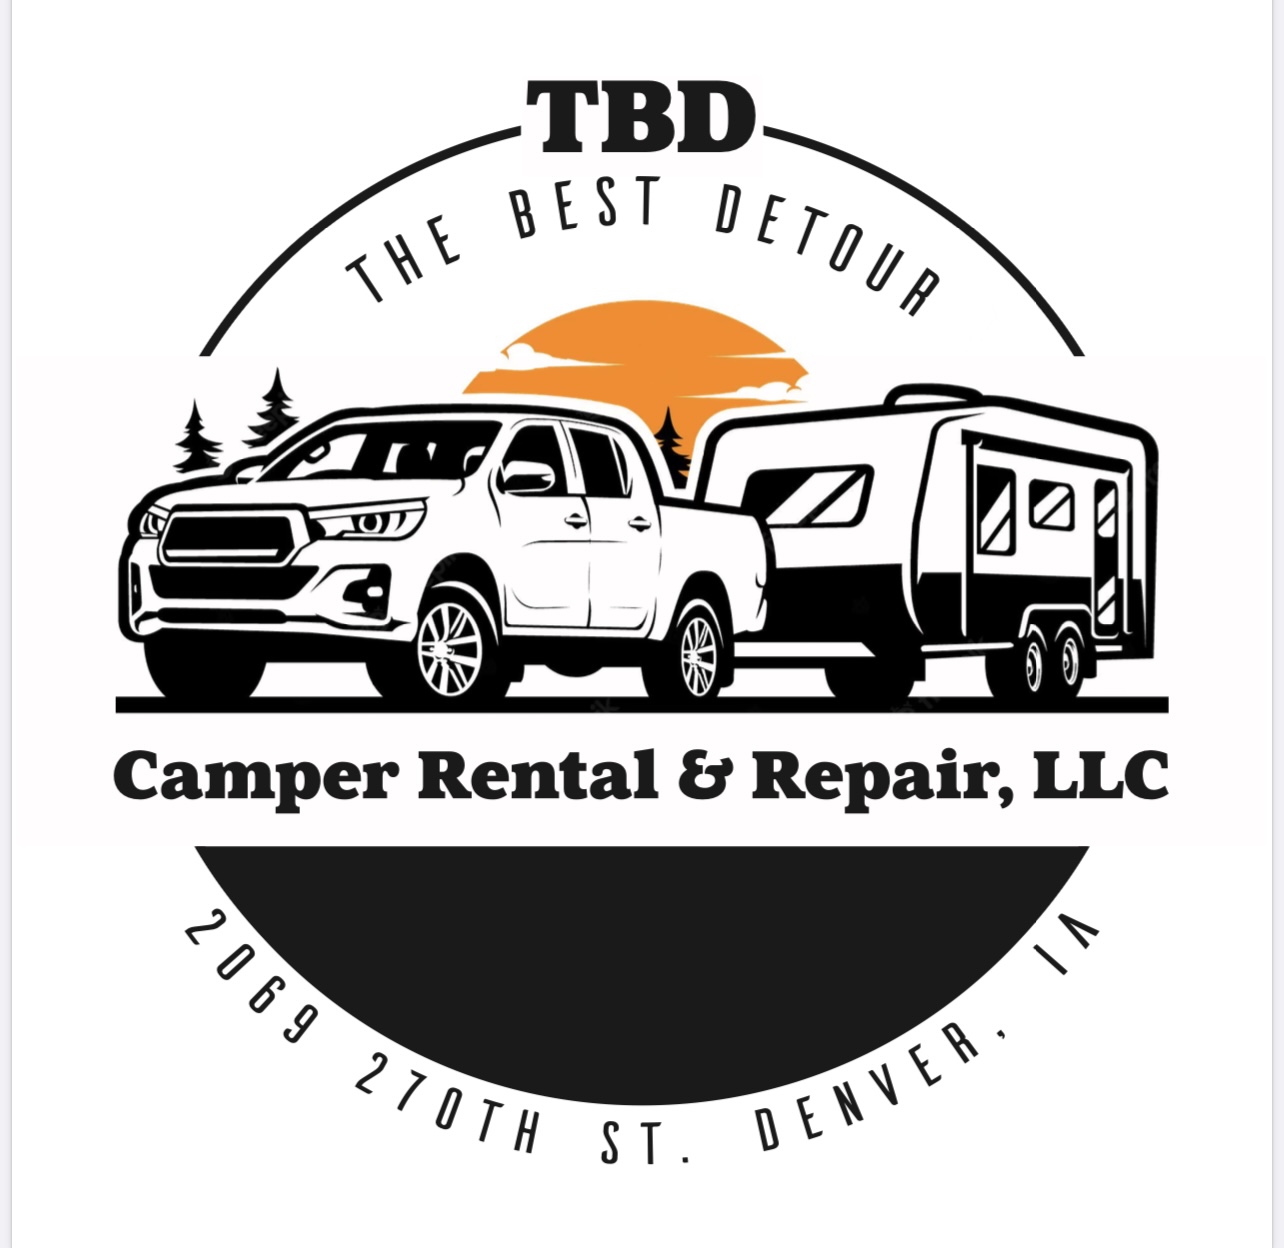 TBD Camper Rental and Repair, LLC 2069 270th St, Denver Iowa 50622